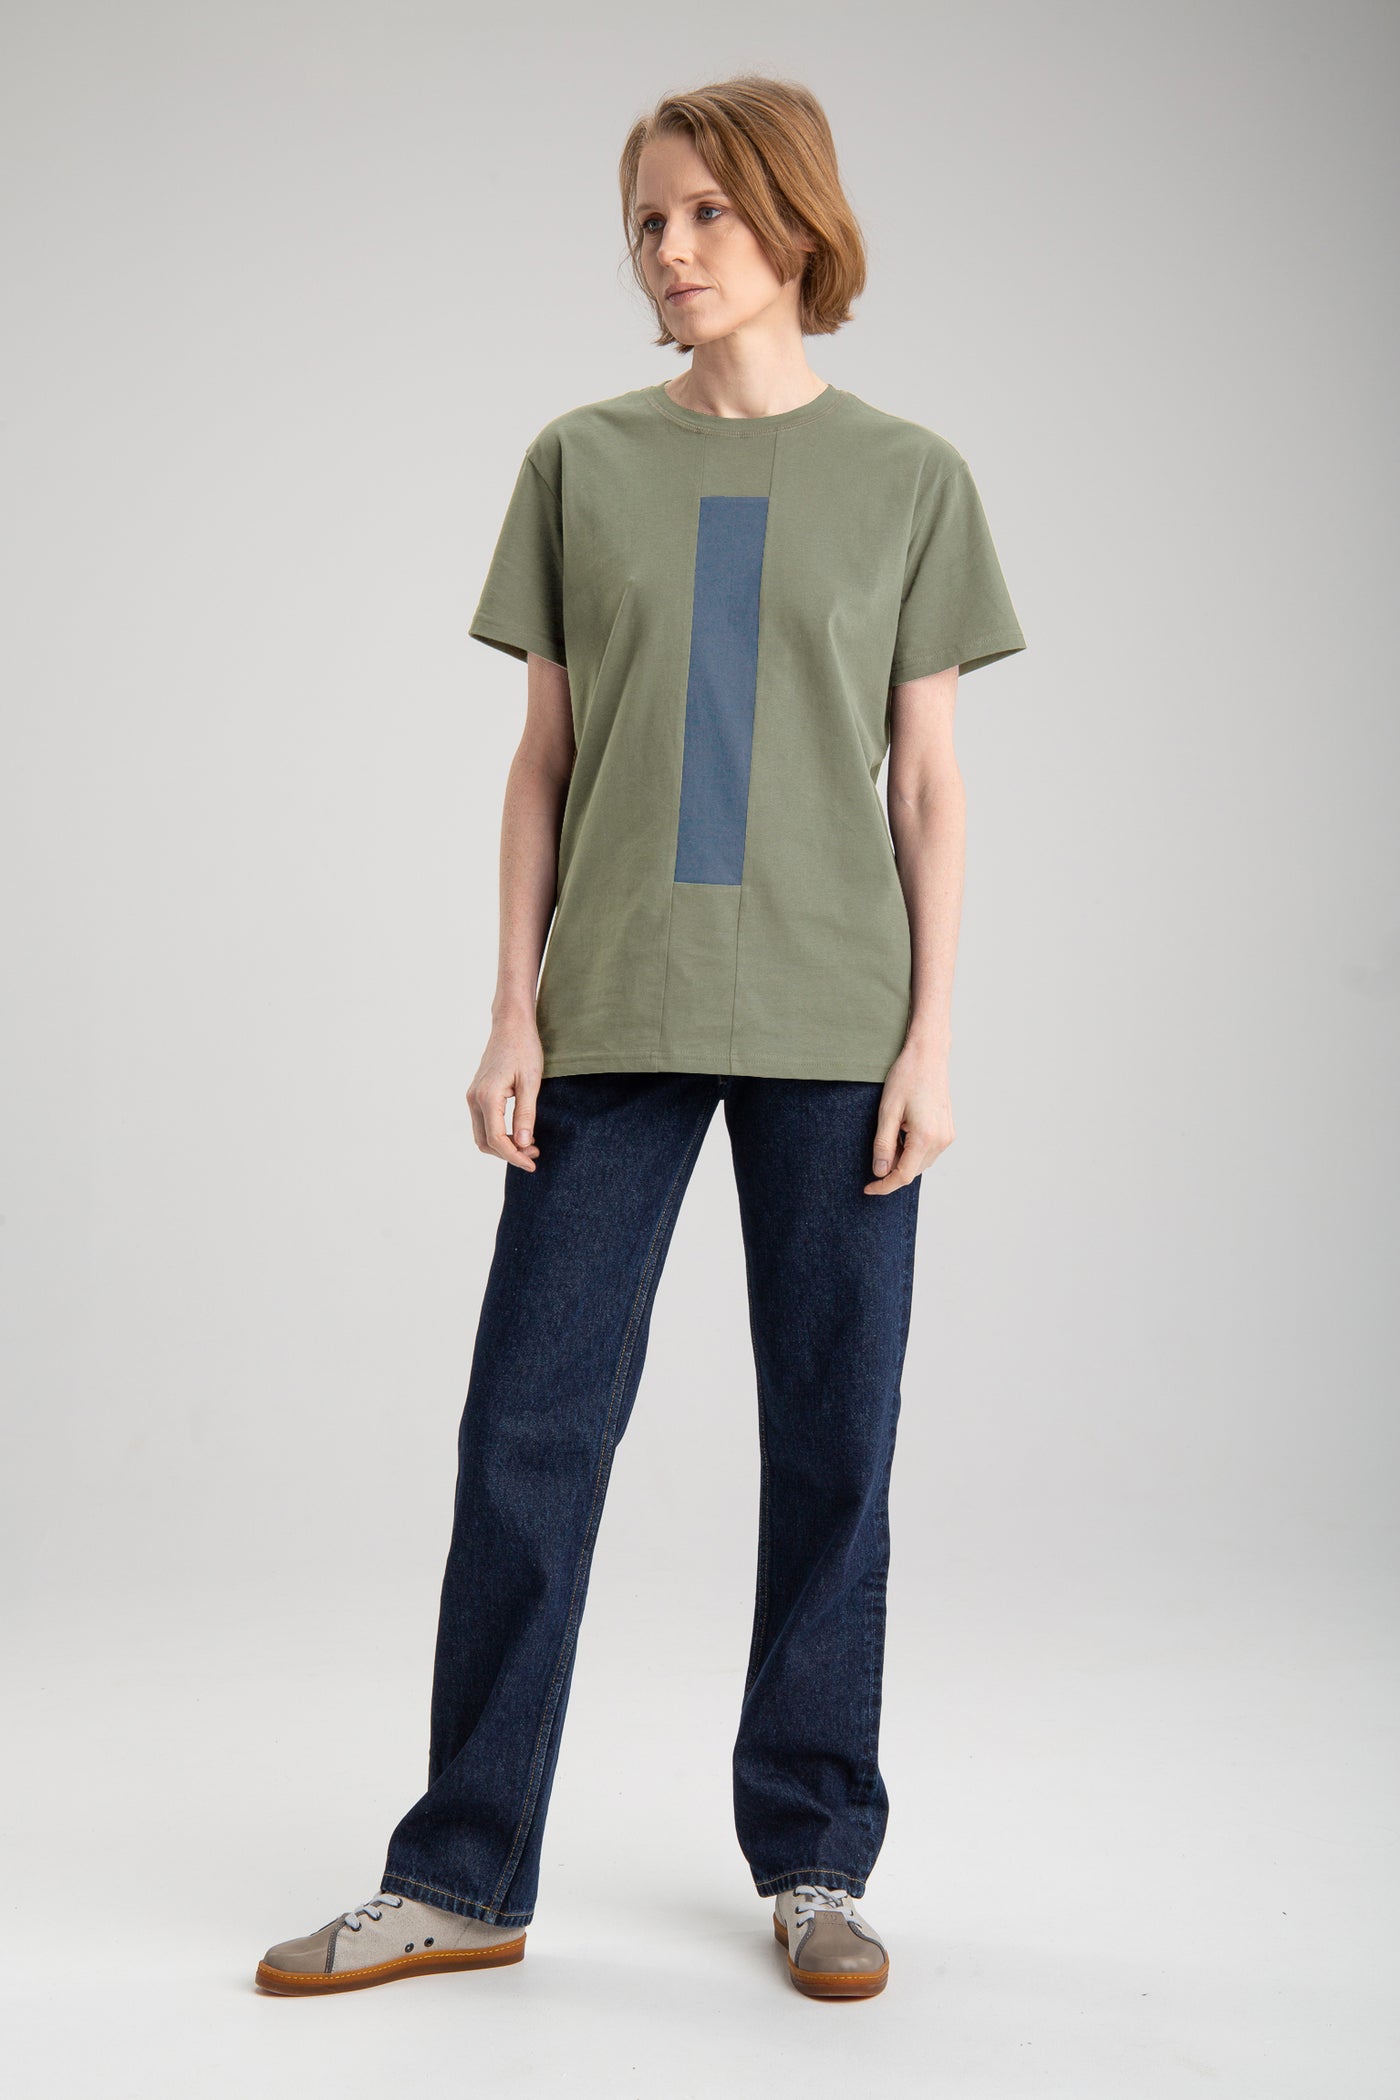 Up-Shirt für Damen - I Motiv | Grün, Blau